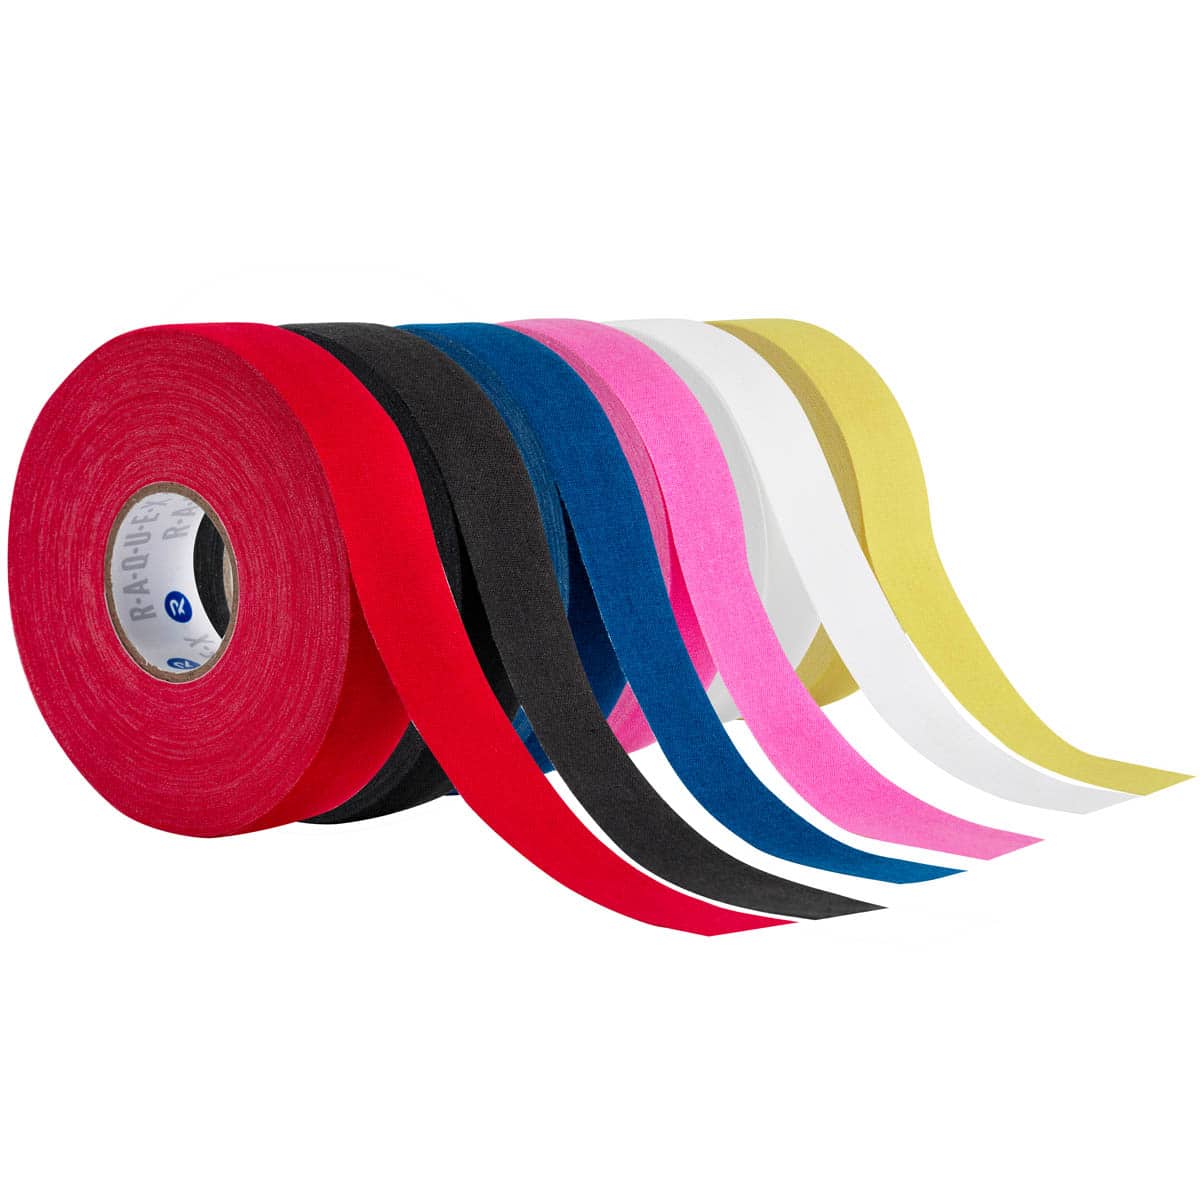 Cloth tape for hockey